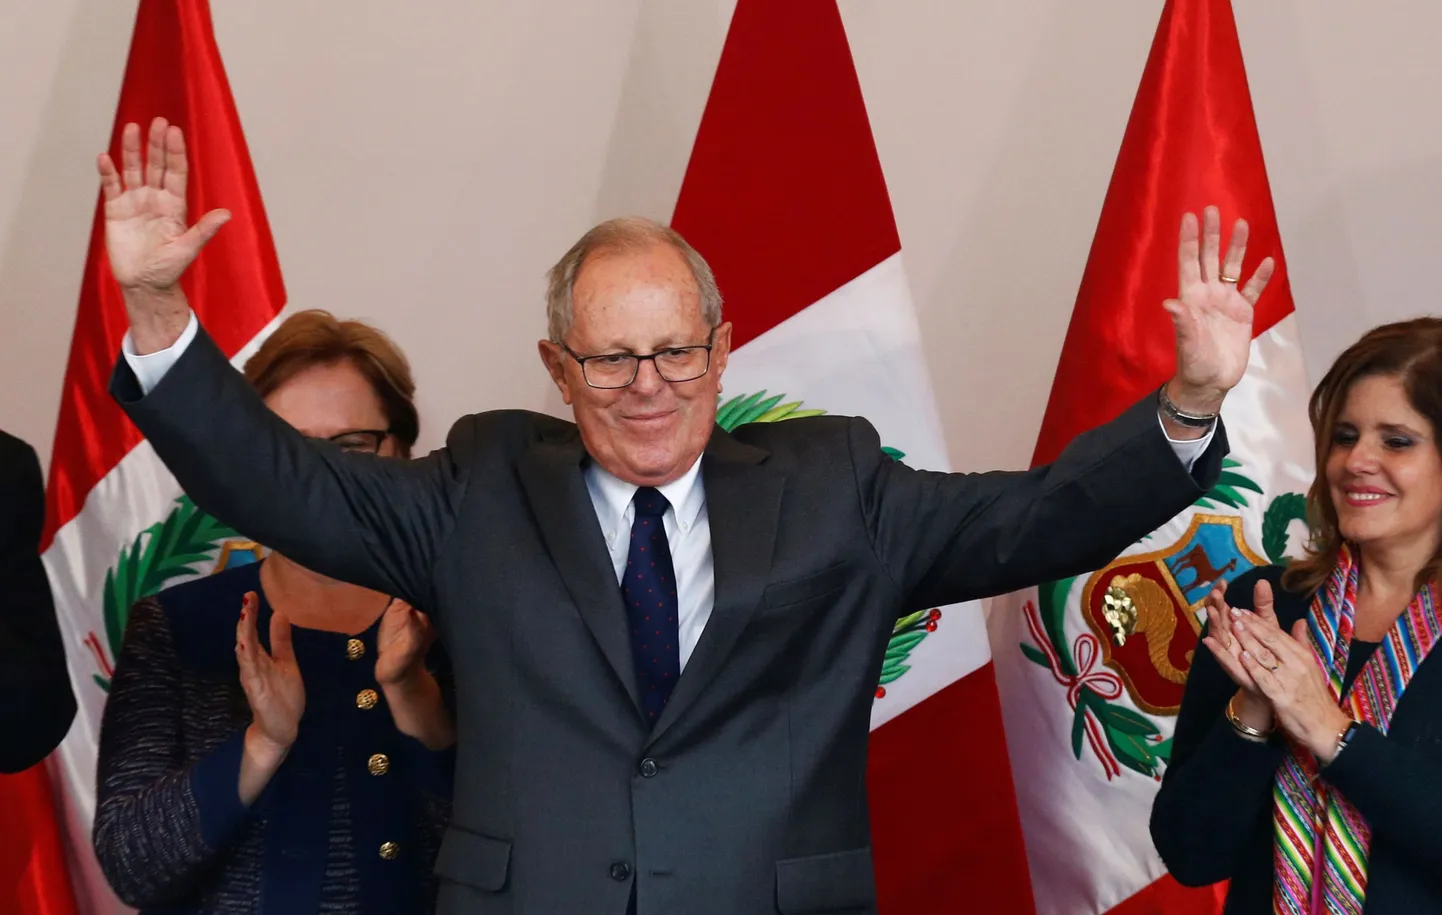 Peruu president Pedro Pablo Kuczynski